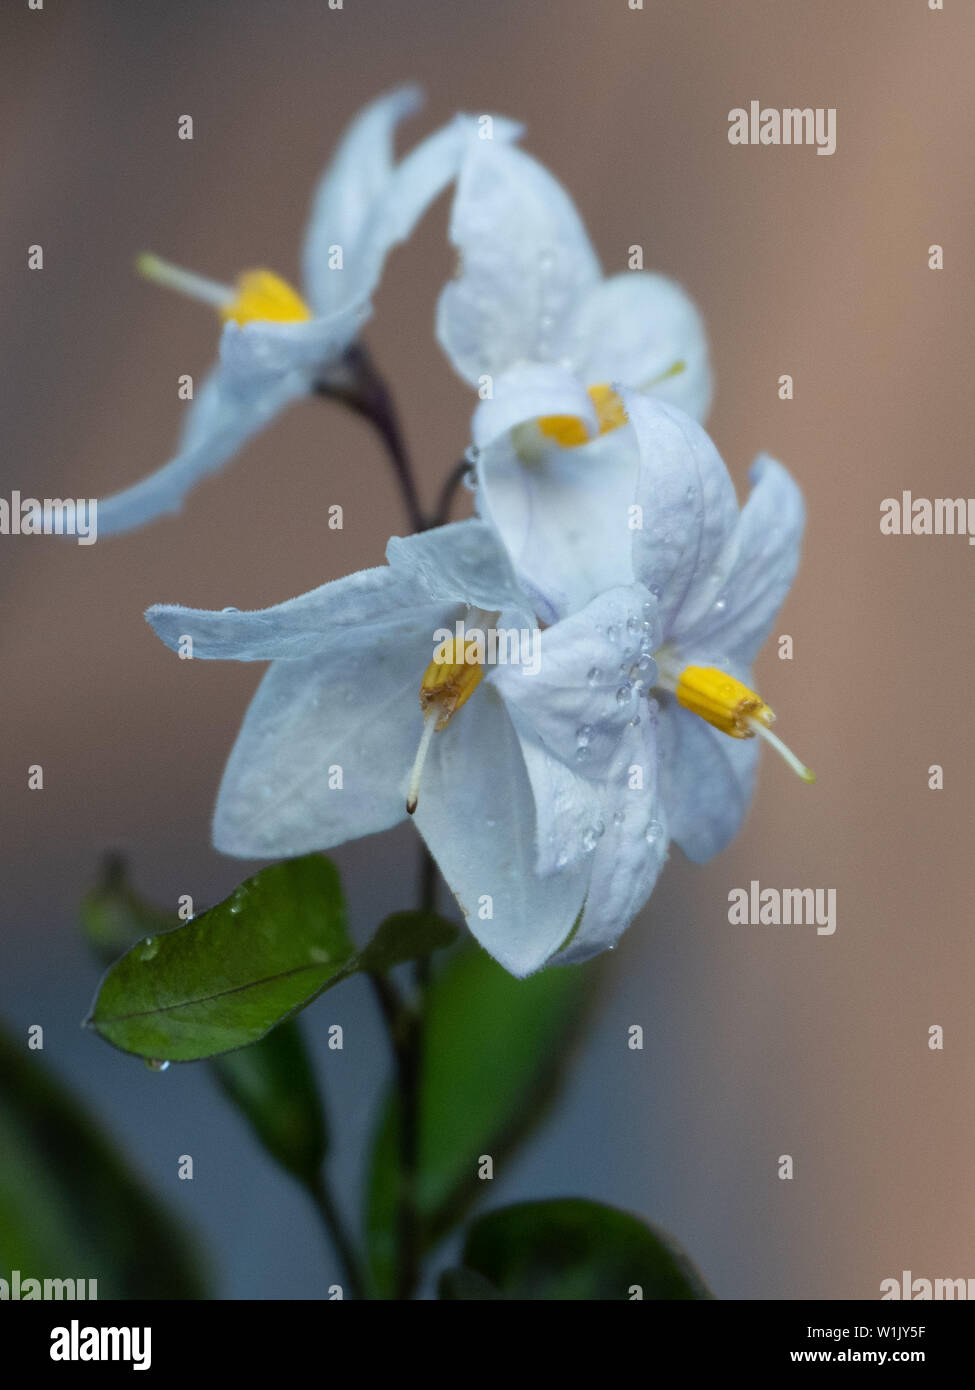 Tiny winter blooms of Solanum laxum or potato vine  up close sprinkled with raindrops Stock Photo